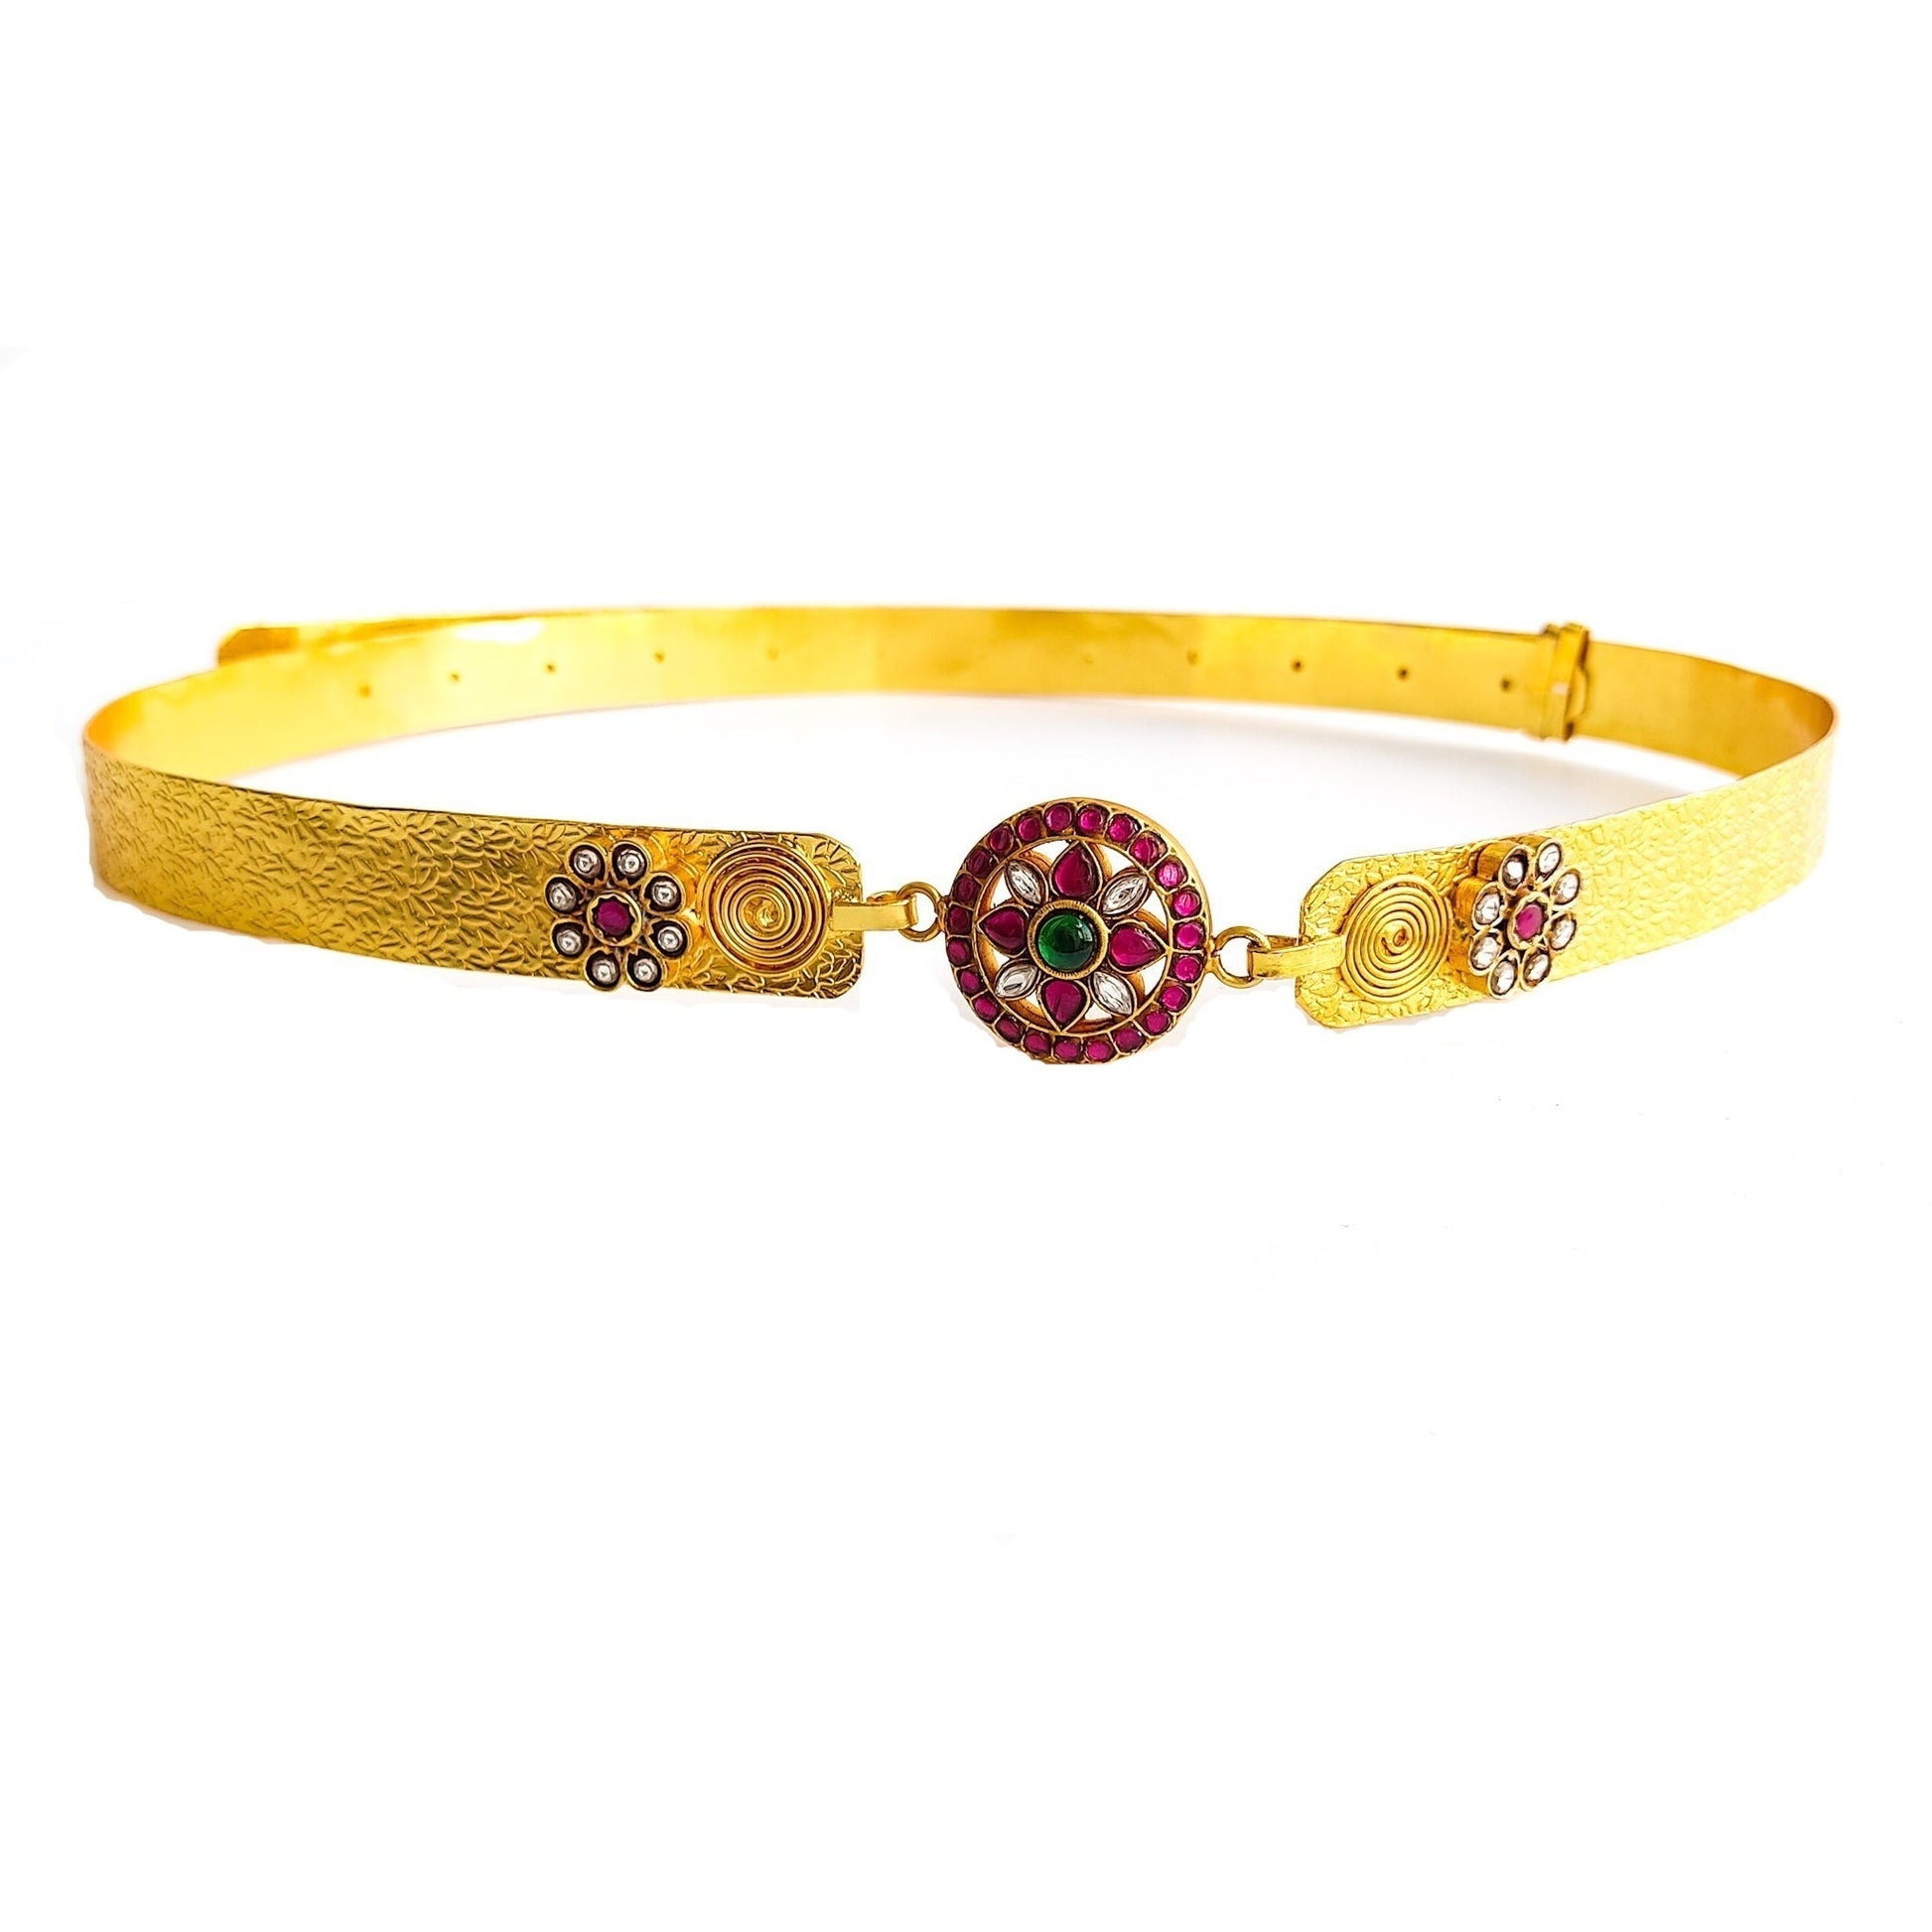 Kundan Hip belt - PA018H22 – Pihtara Jewels